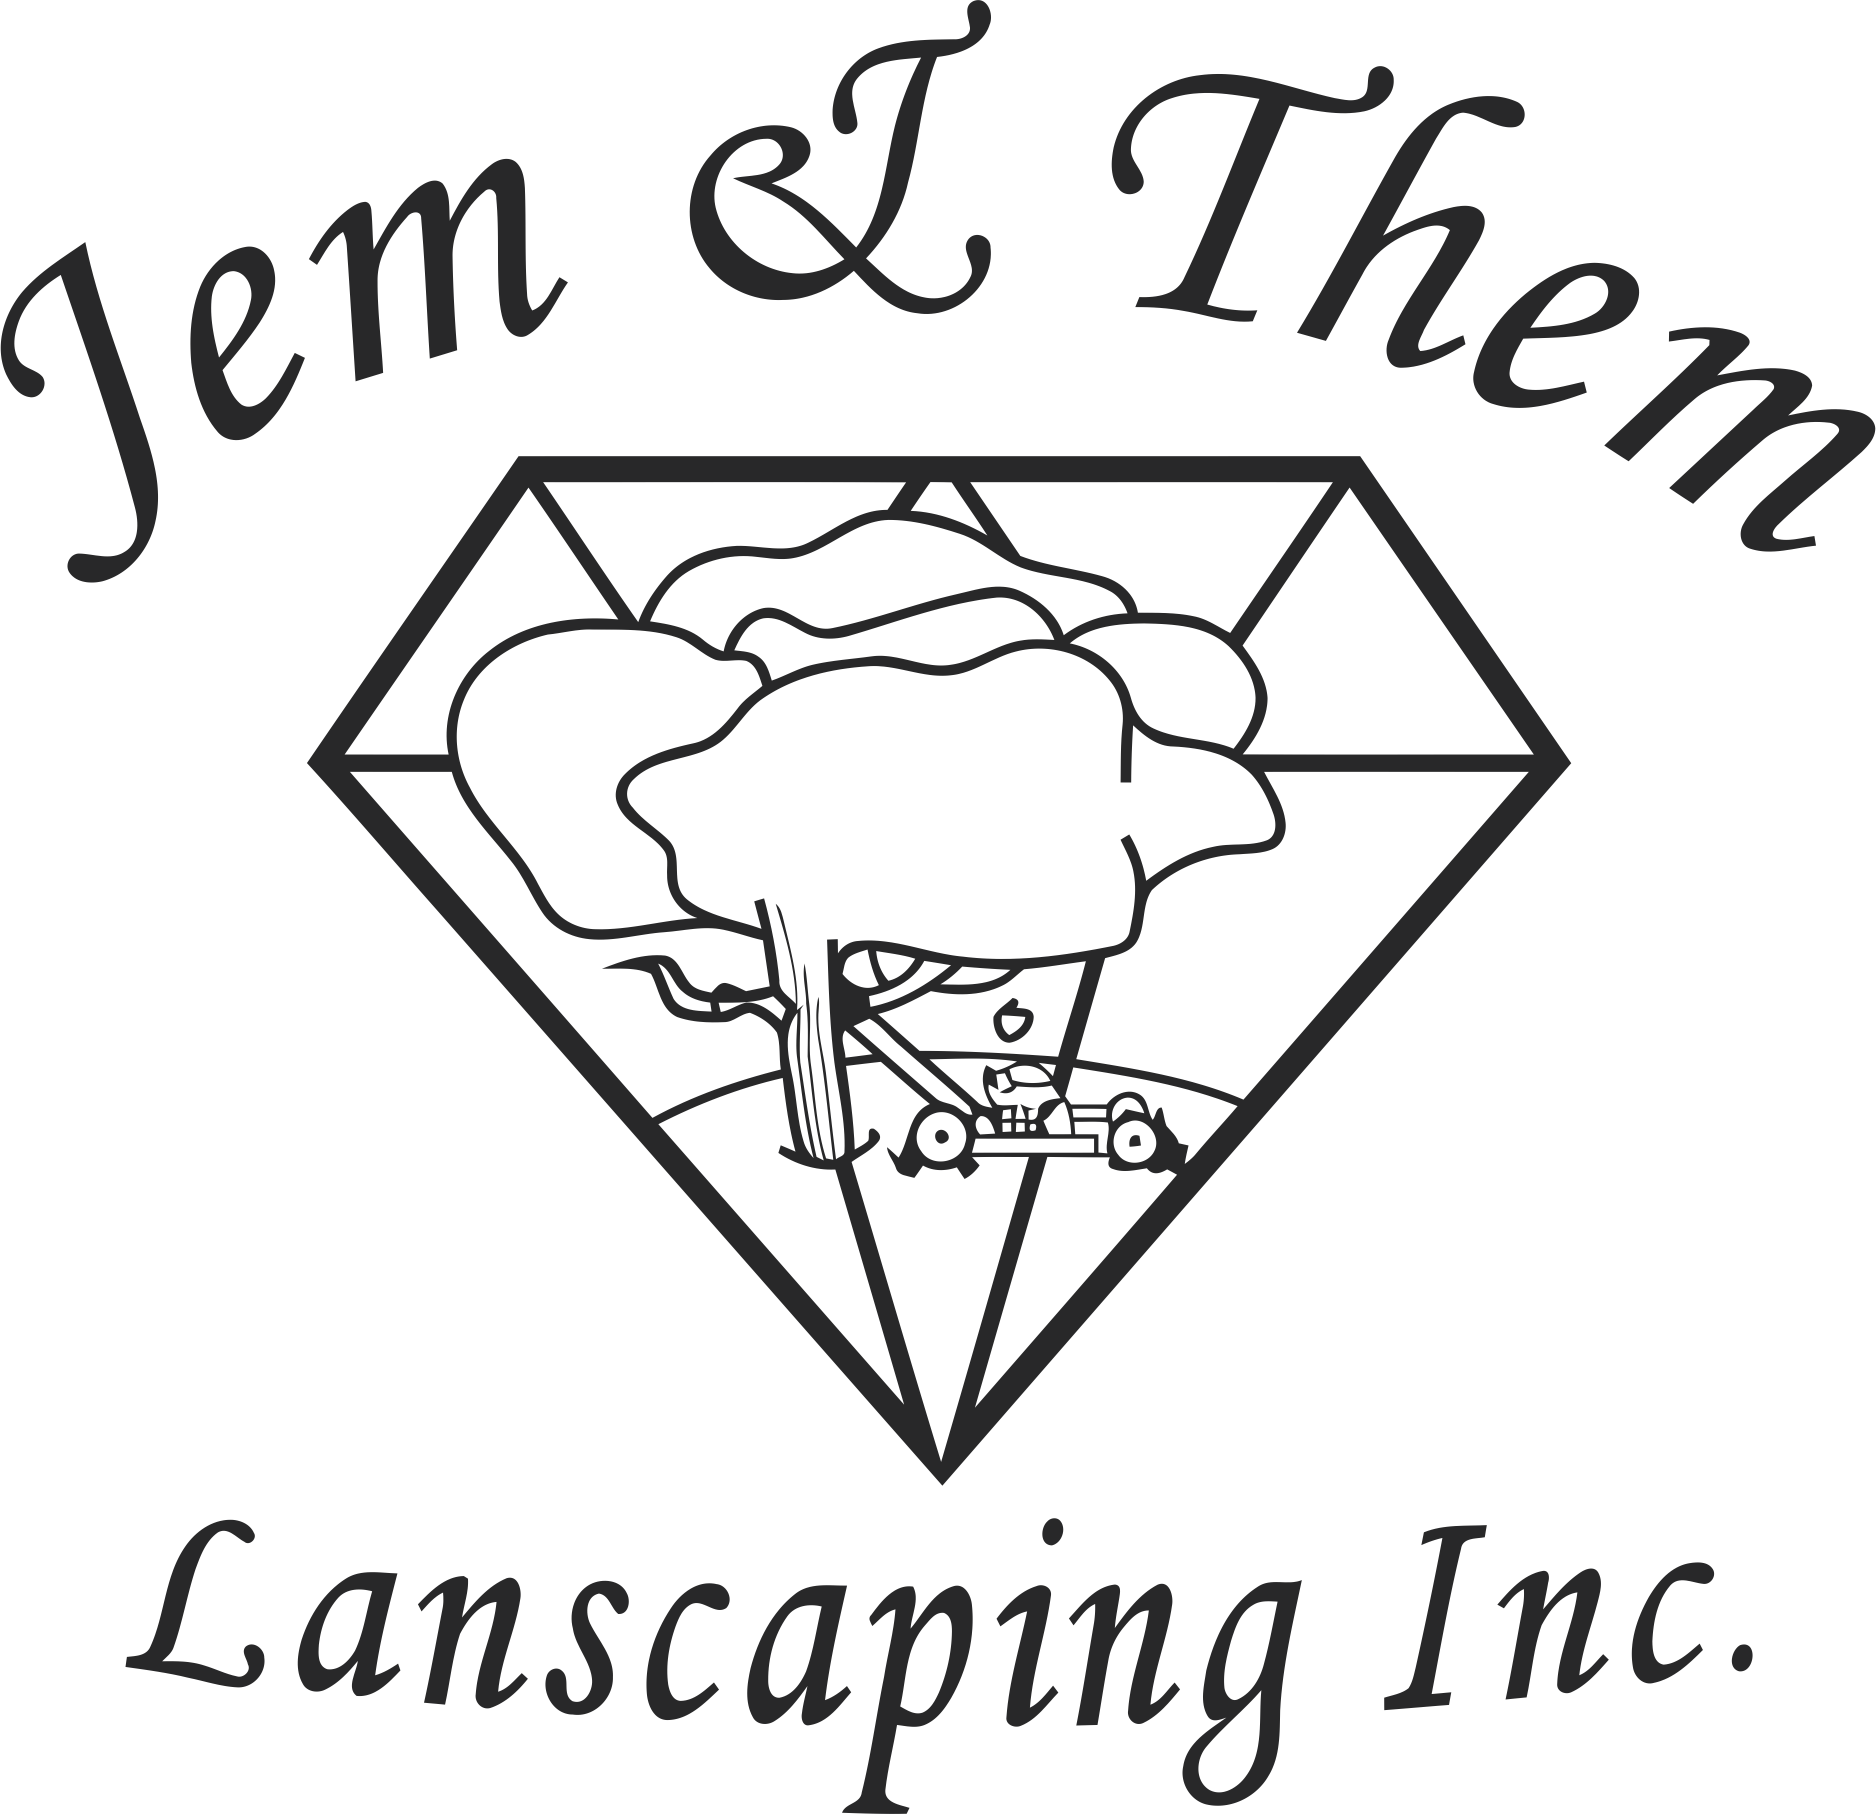 Jem & Them Landscaping, Inc.